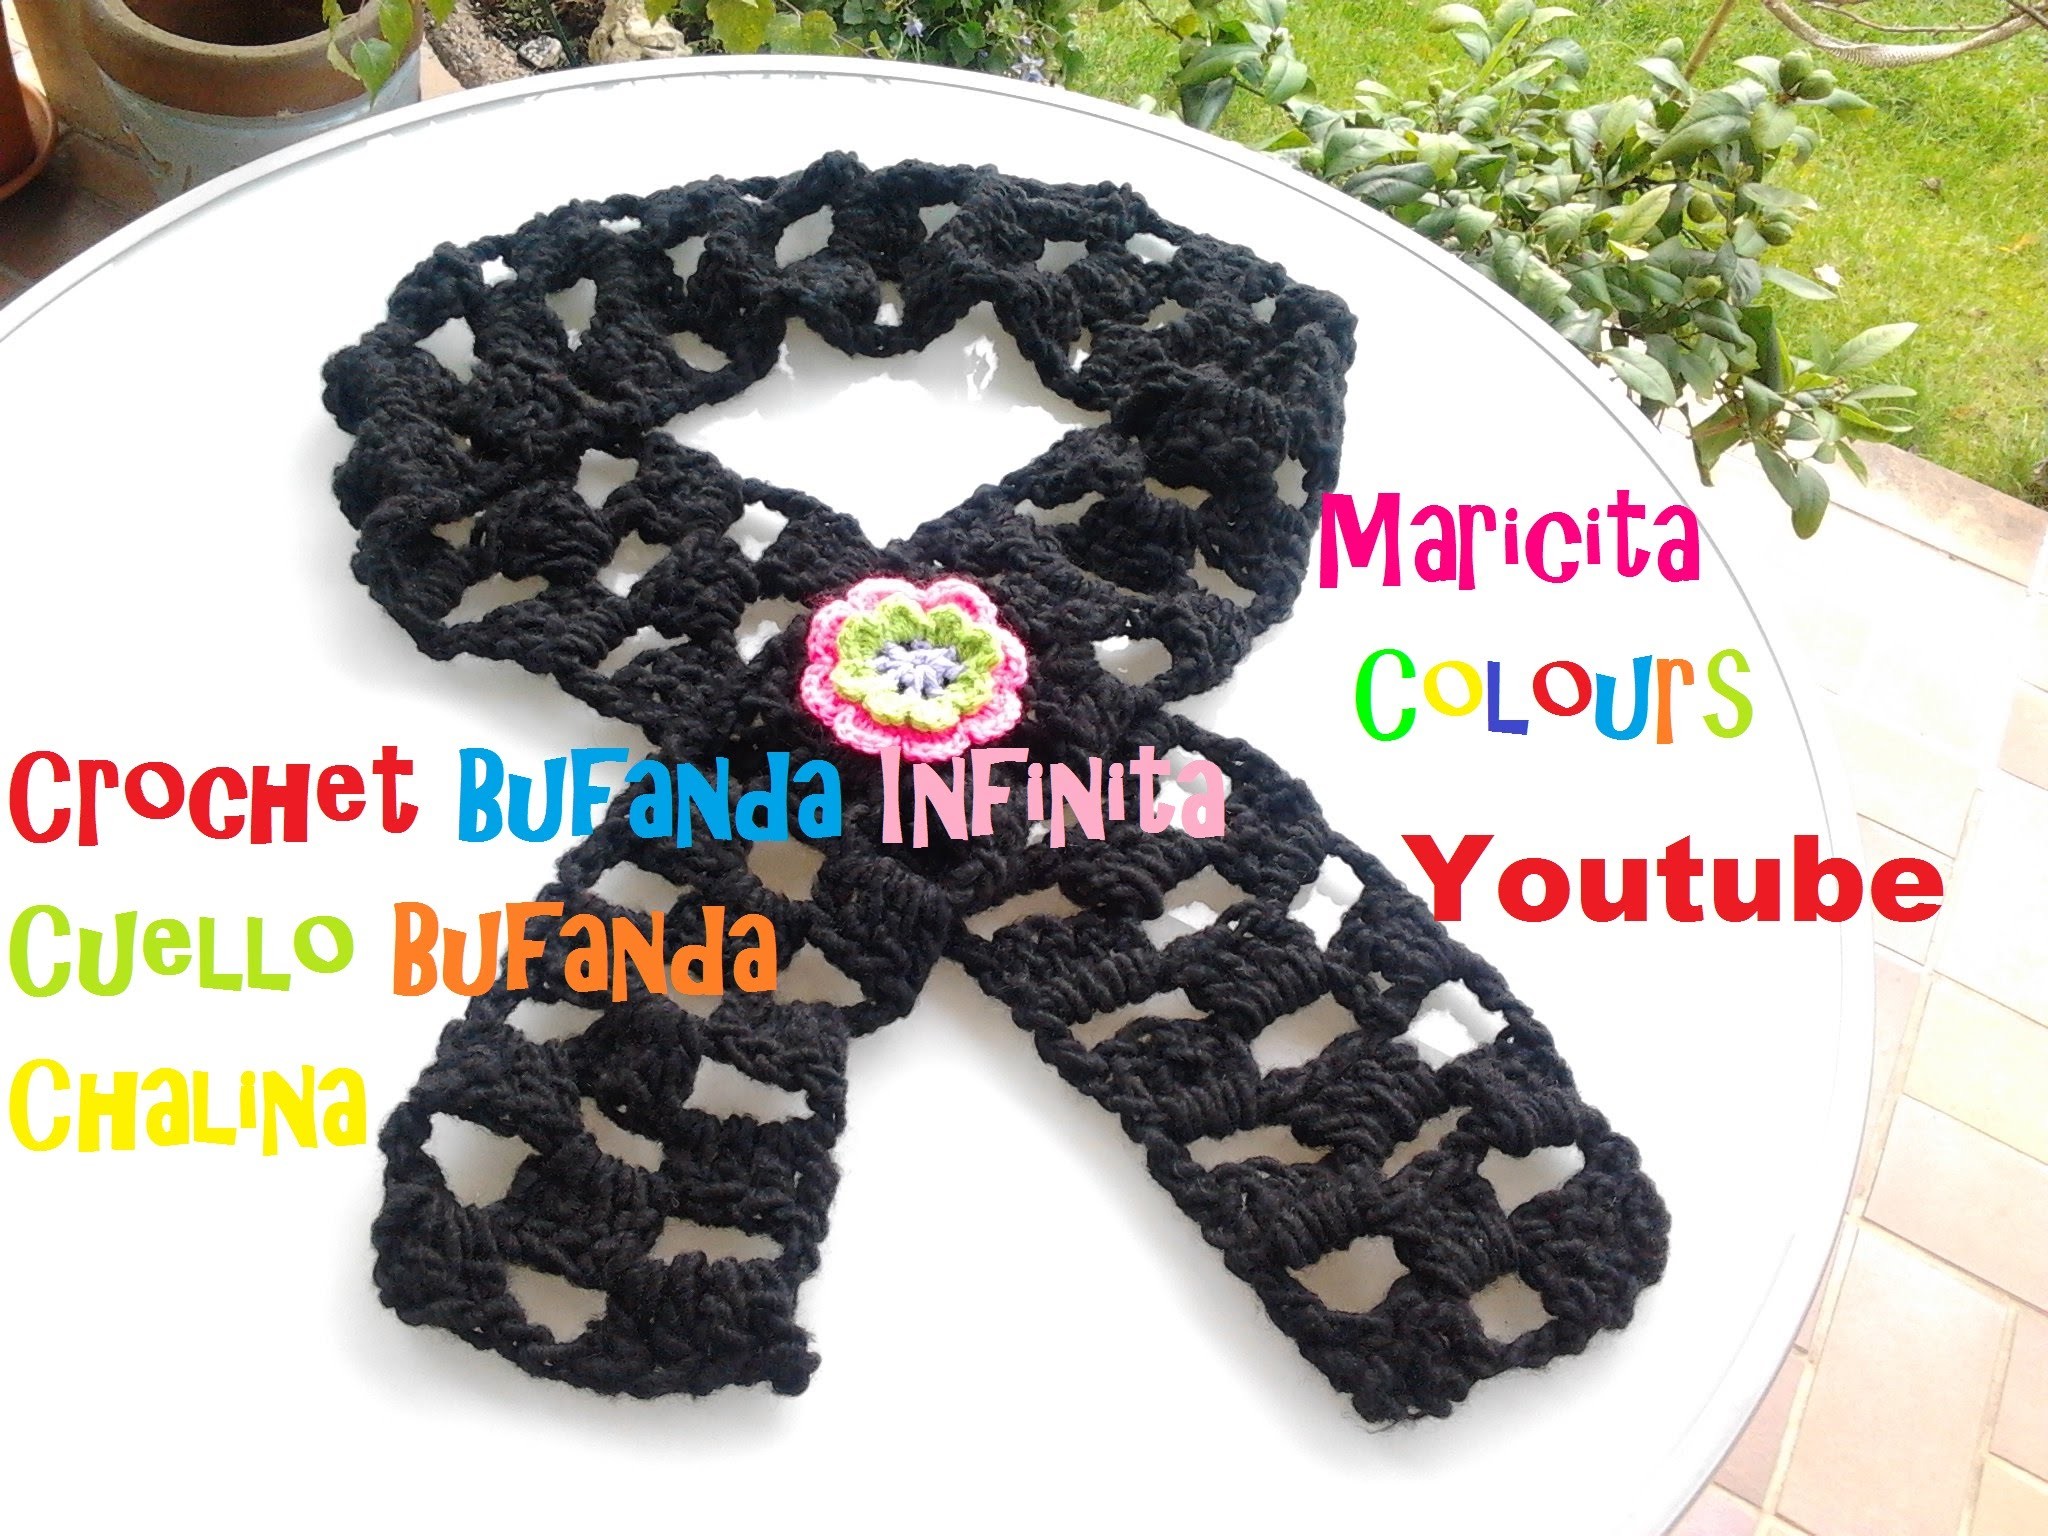 Crochet Tutorial Bufanda Infinita "Amelie"  - Chalina, chal, bufanda cuello